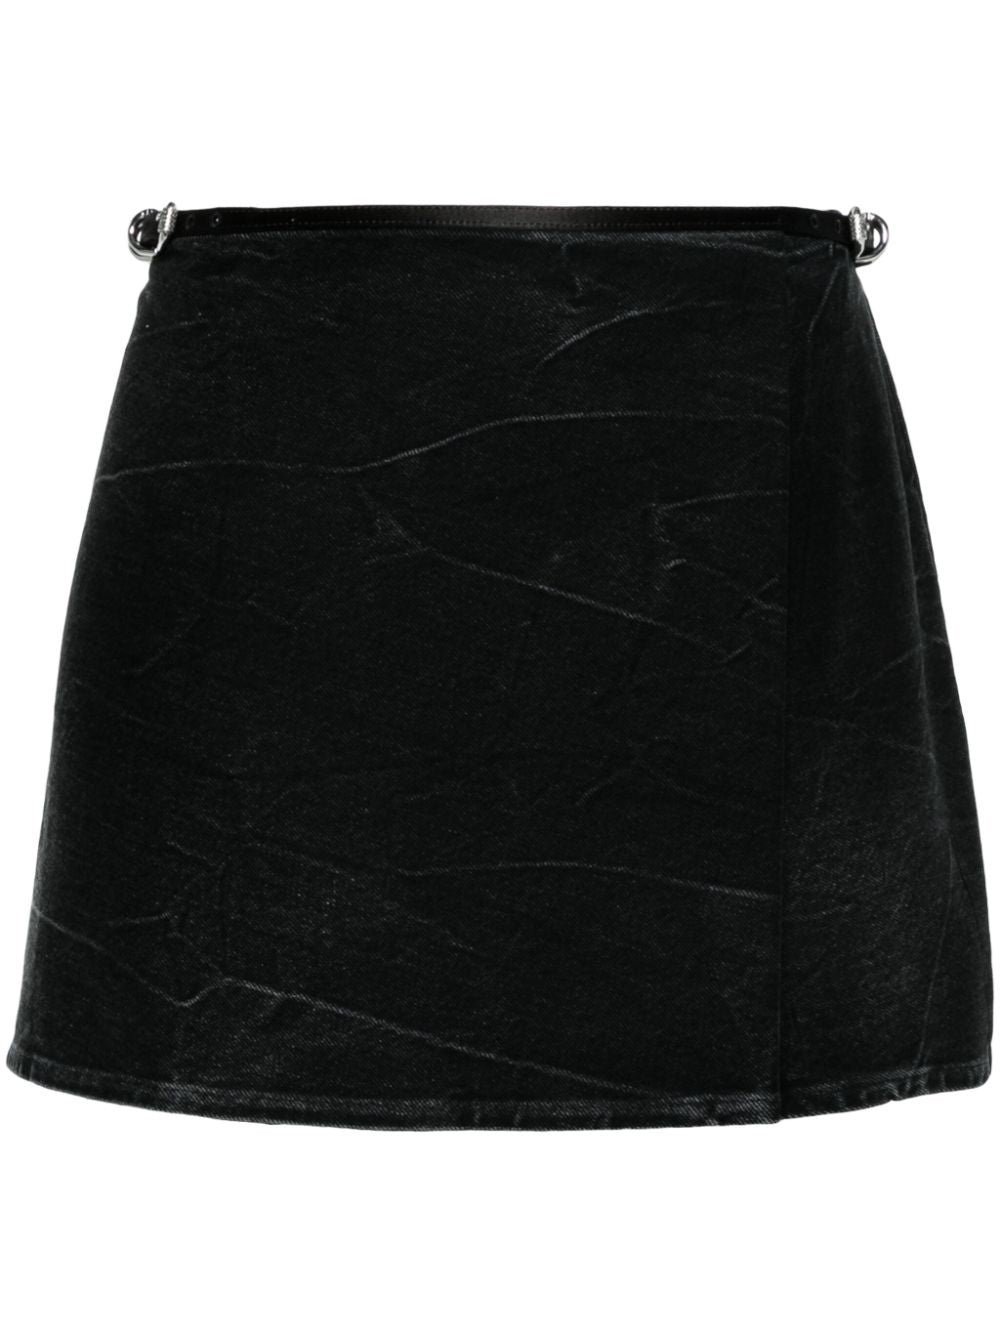 Givenchy Skirts Black